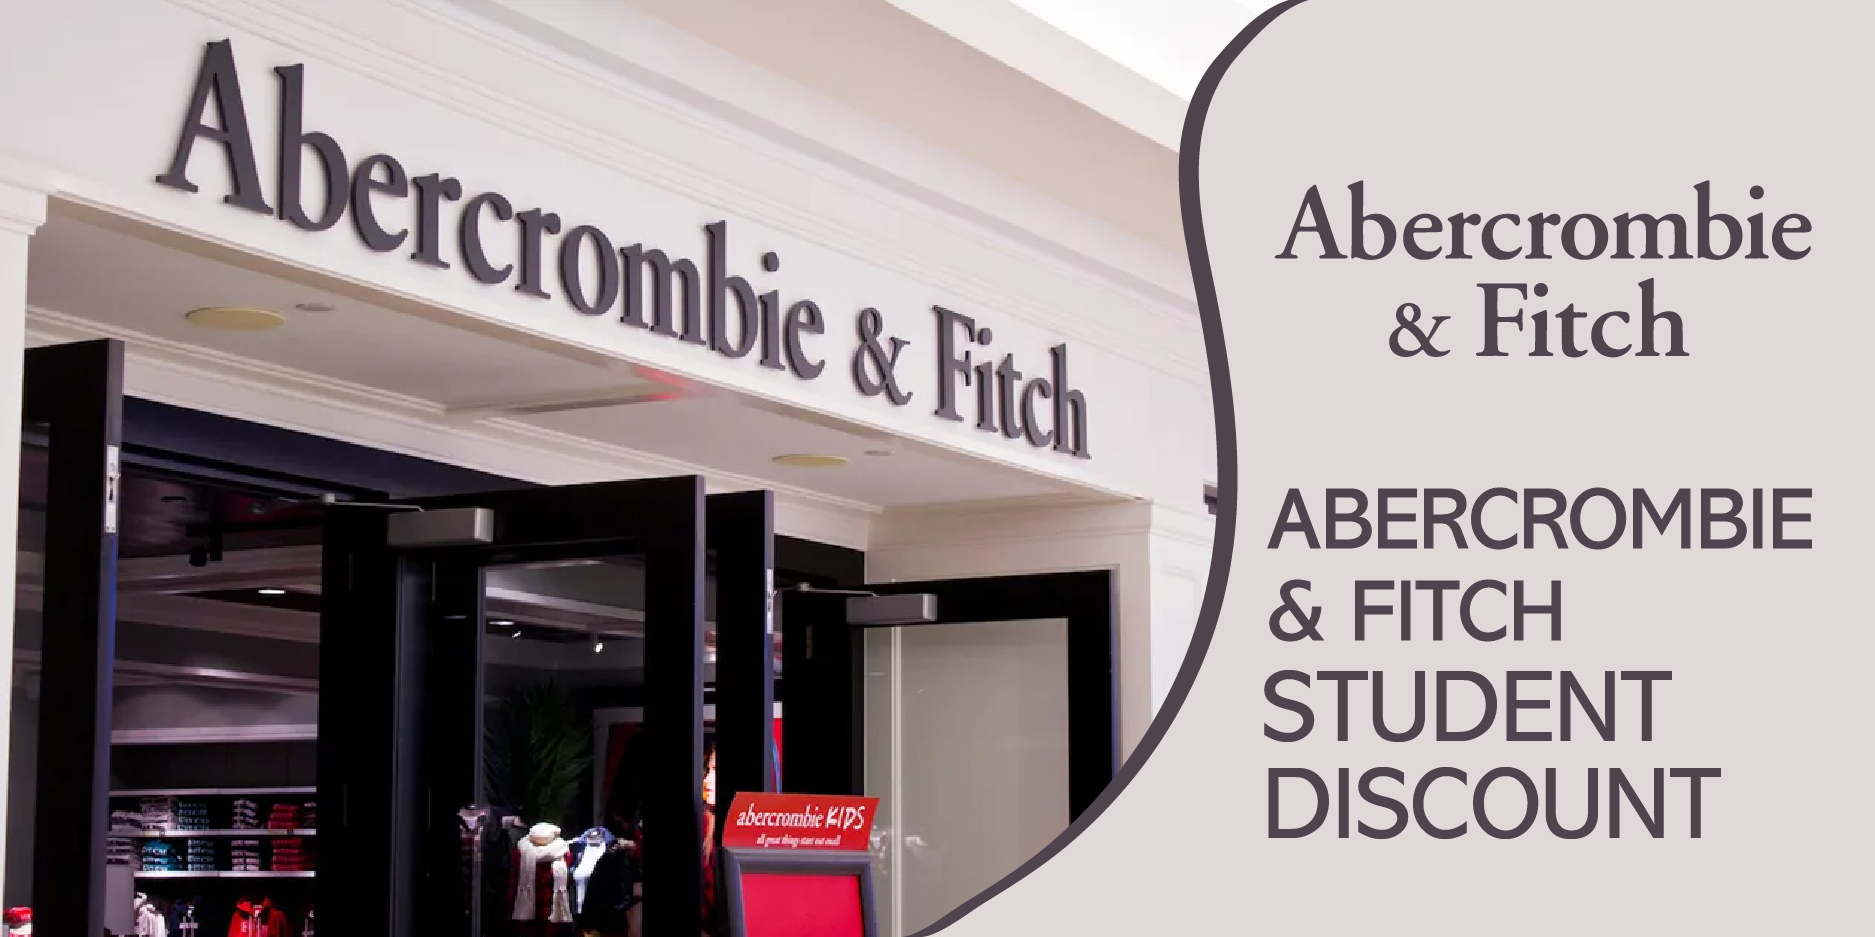 Abercrombie Student Discount